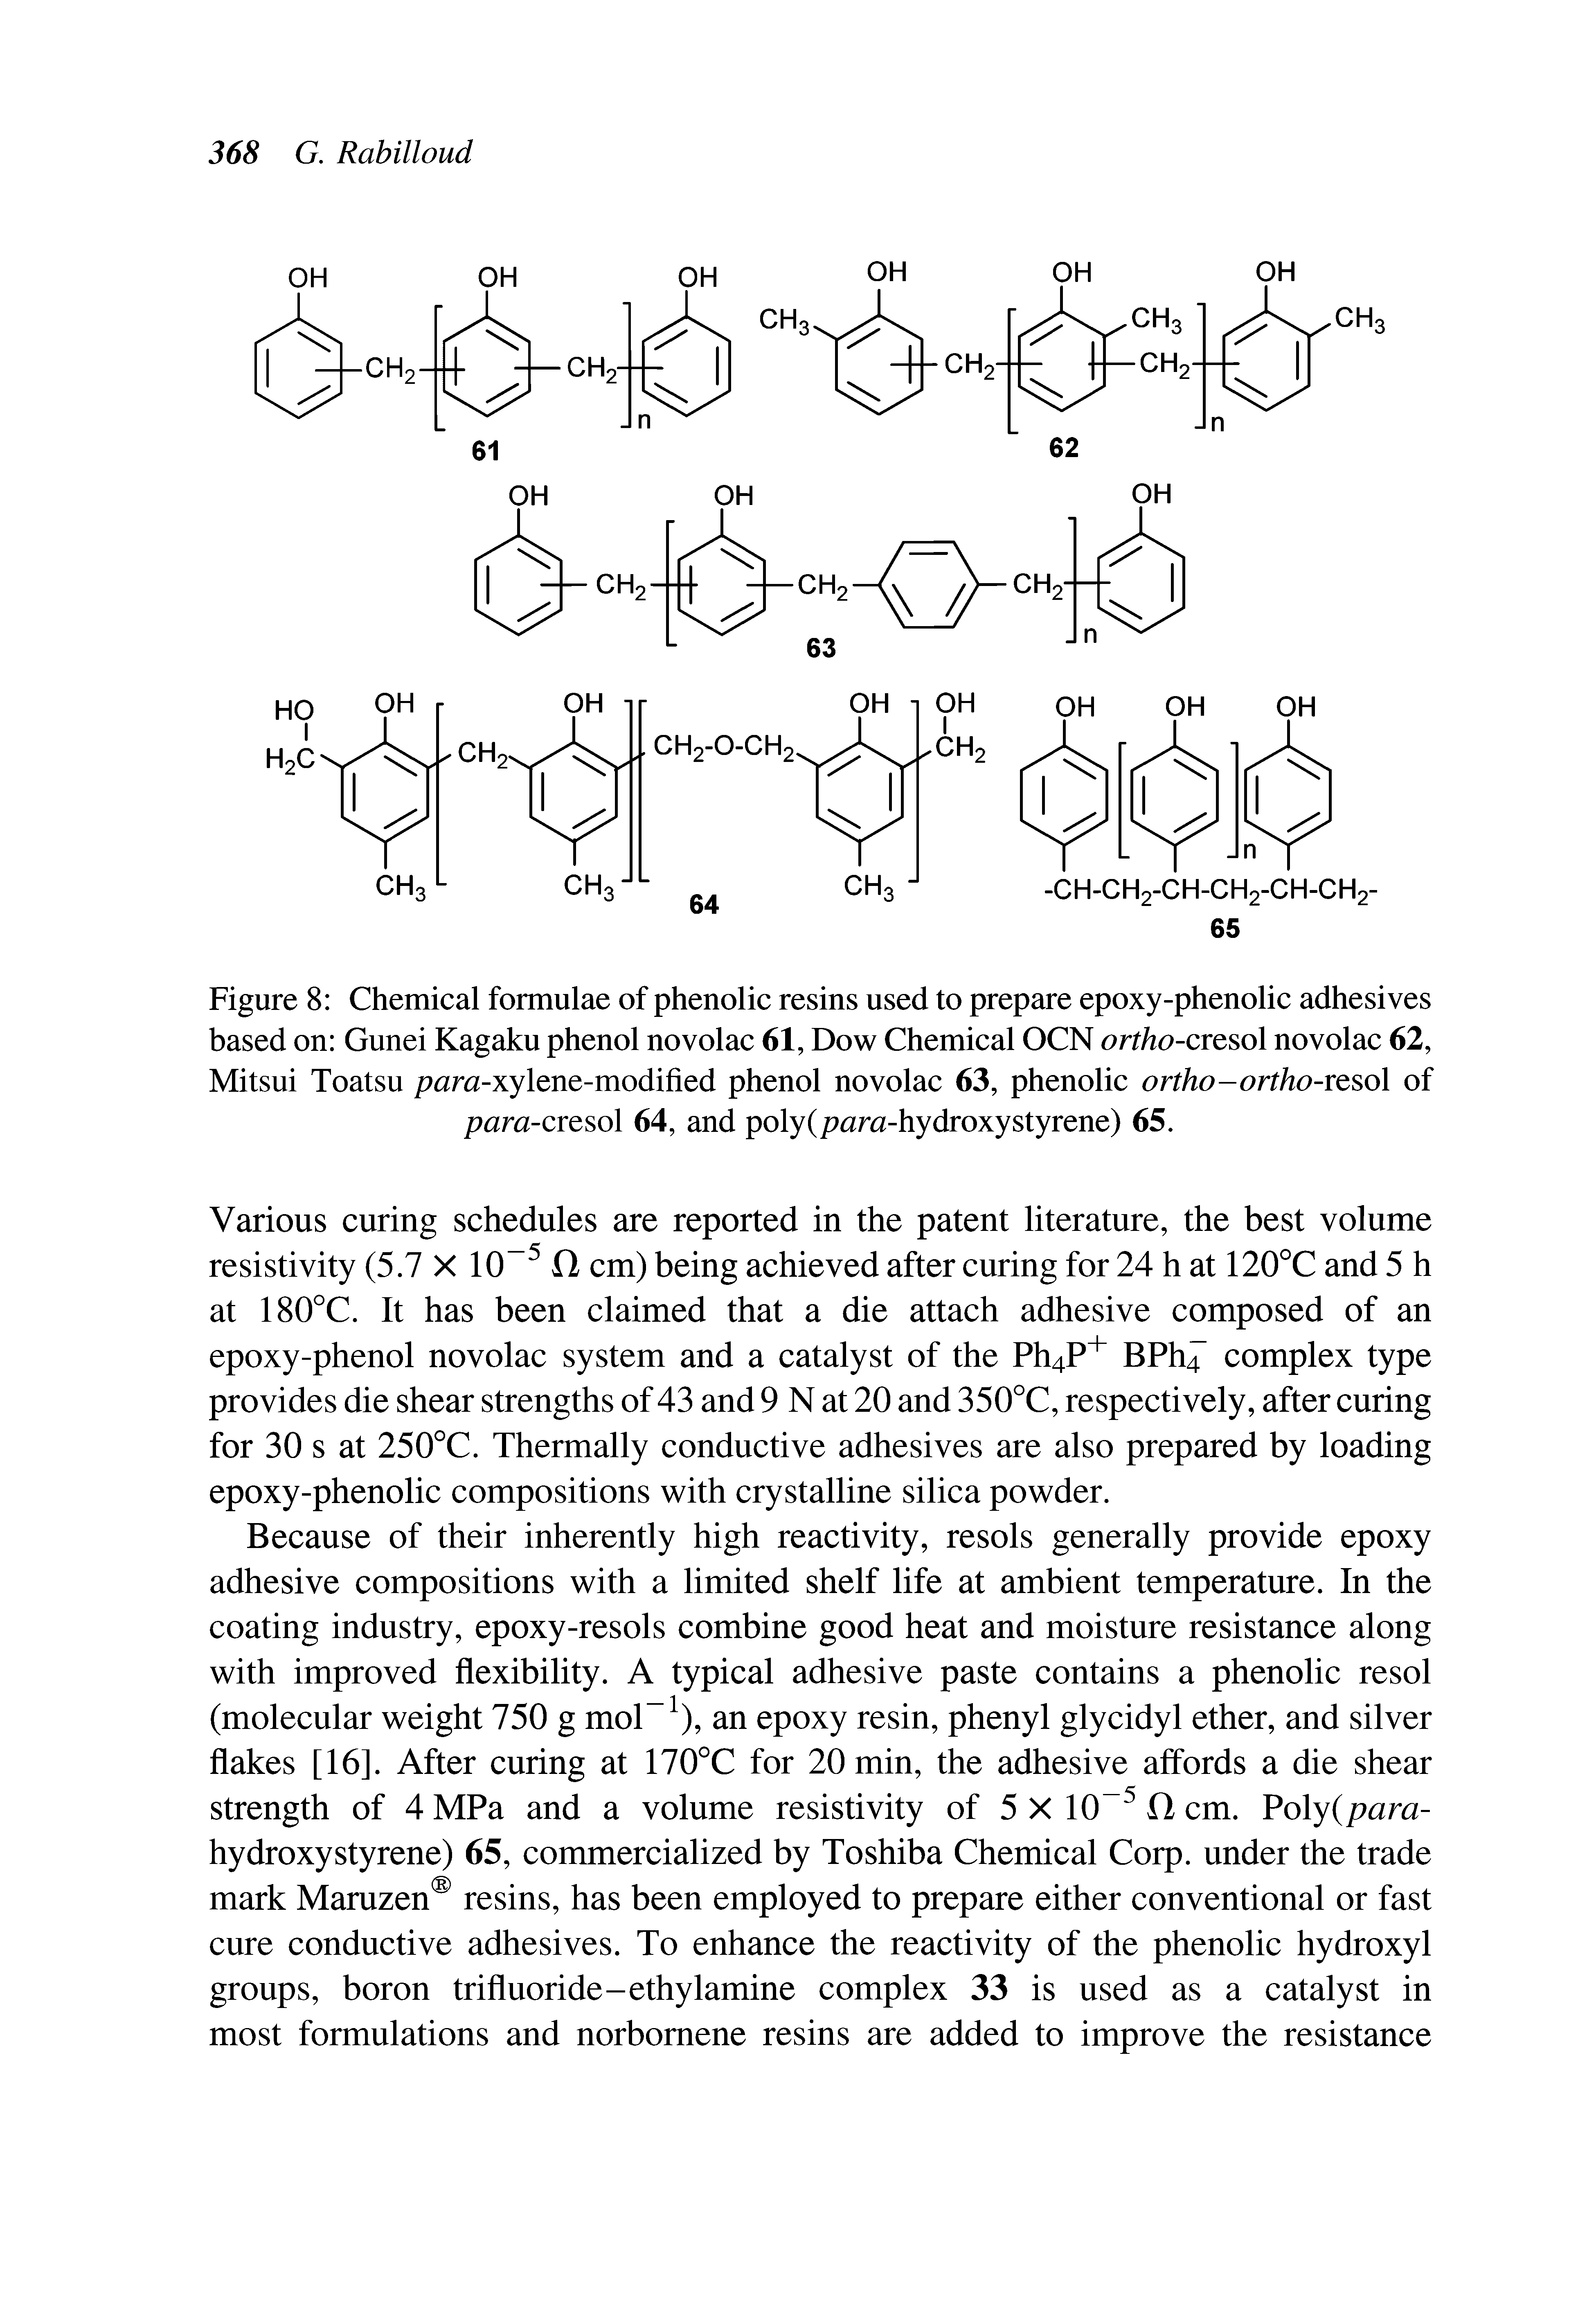 Figure 8 Chemical formulae of phenolic resins used to prepare epoxy-phenolic adhesives based on Gunei Kagaku phenol novolac 61, Dow Chemical OCN ortho-cxQsoX novolac 62, Mitsui Toatsu para-xylene-modified phenol novolac 63, phenolic ortho-ortho-vtsoX of para-cresol 64, and poly (para-hydroxy styrene) 65.